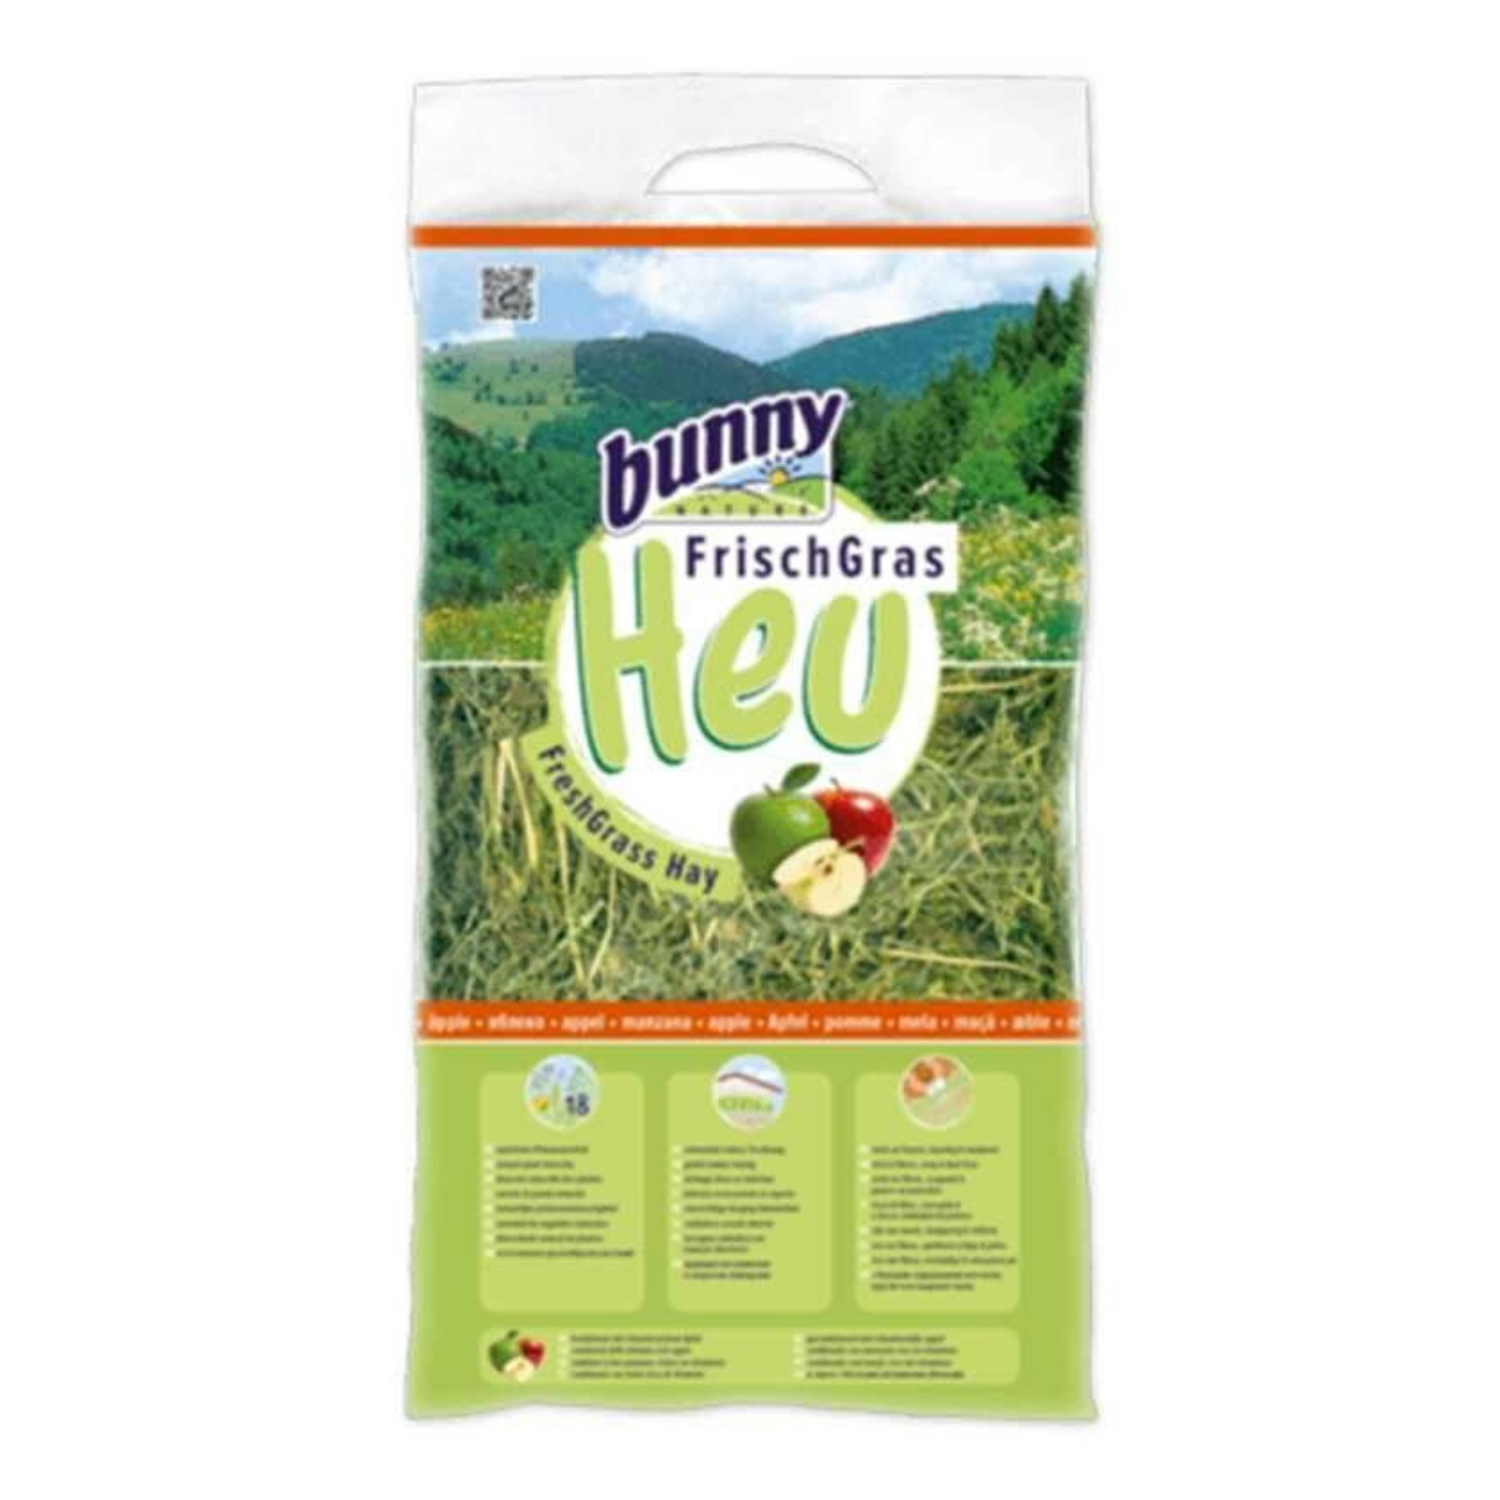 Bunny Nature Fresh Grass Hay (Apples) - 500g